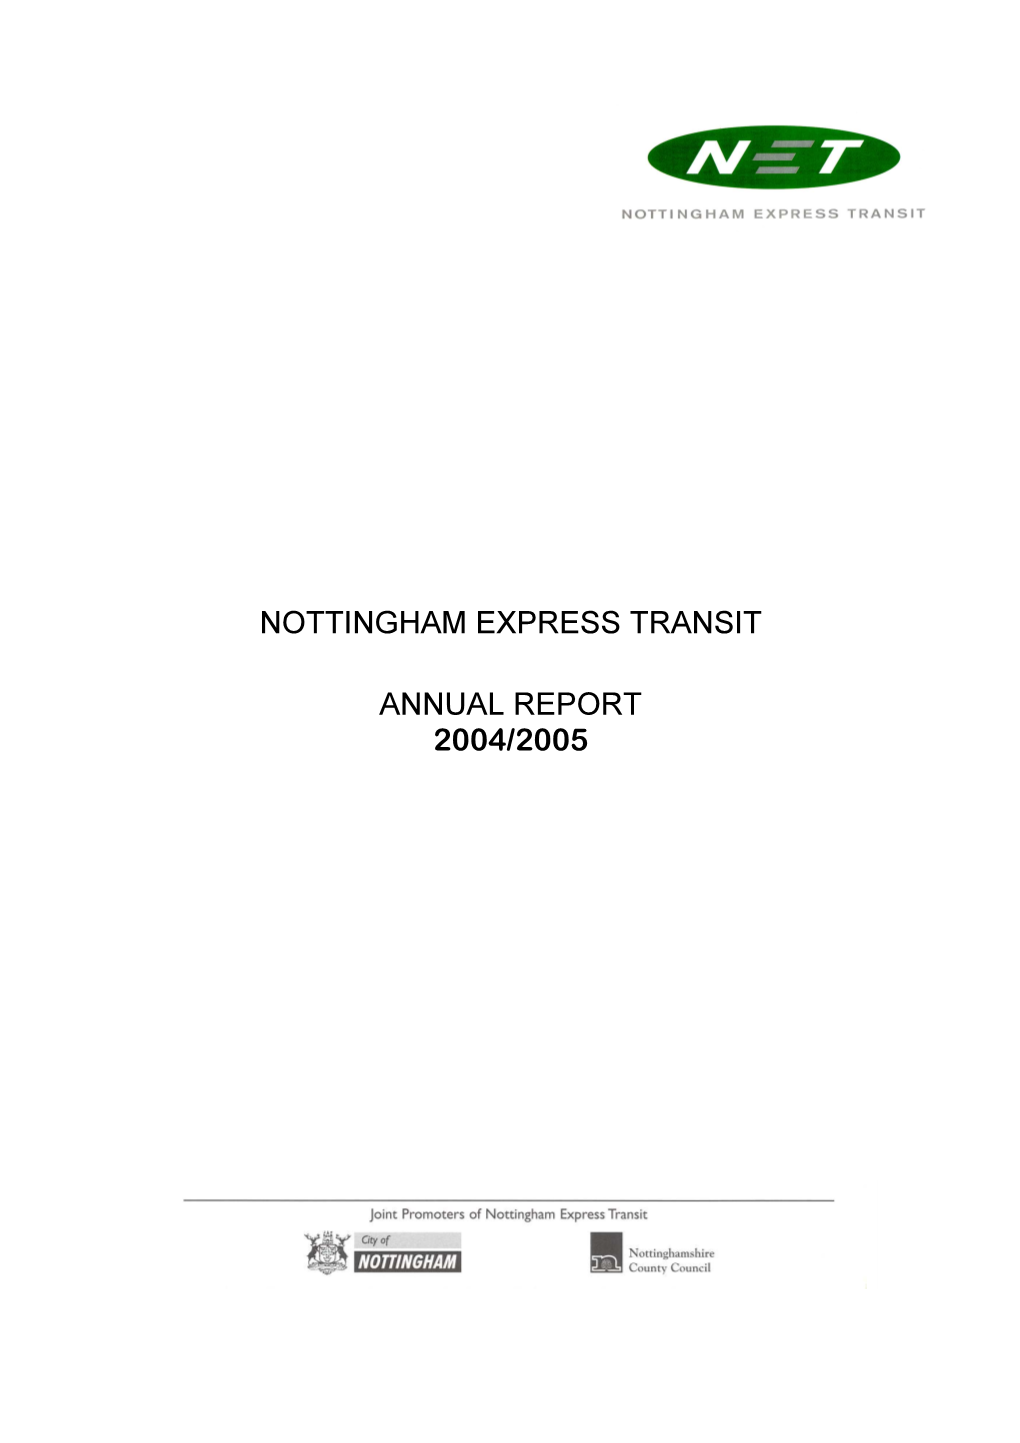 Nottingham Express Transit Annual Report 2004/2005